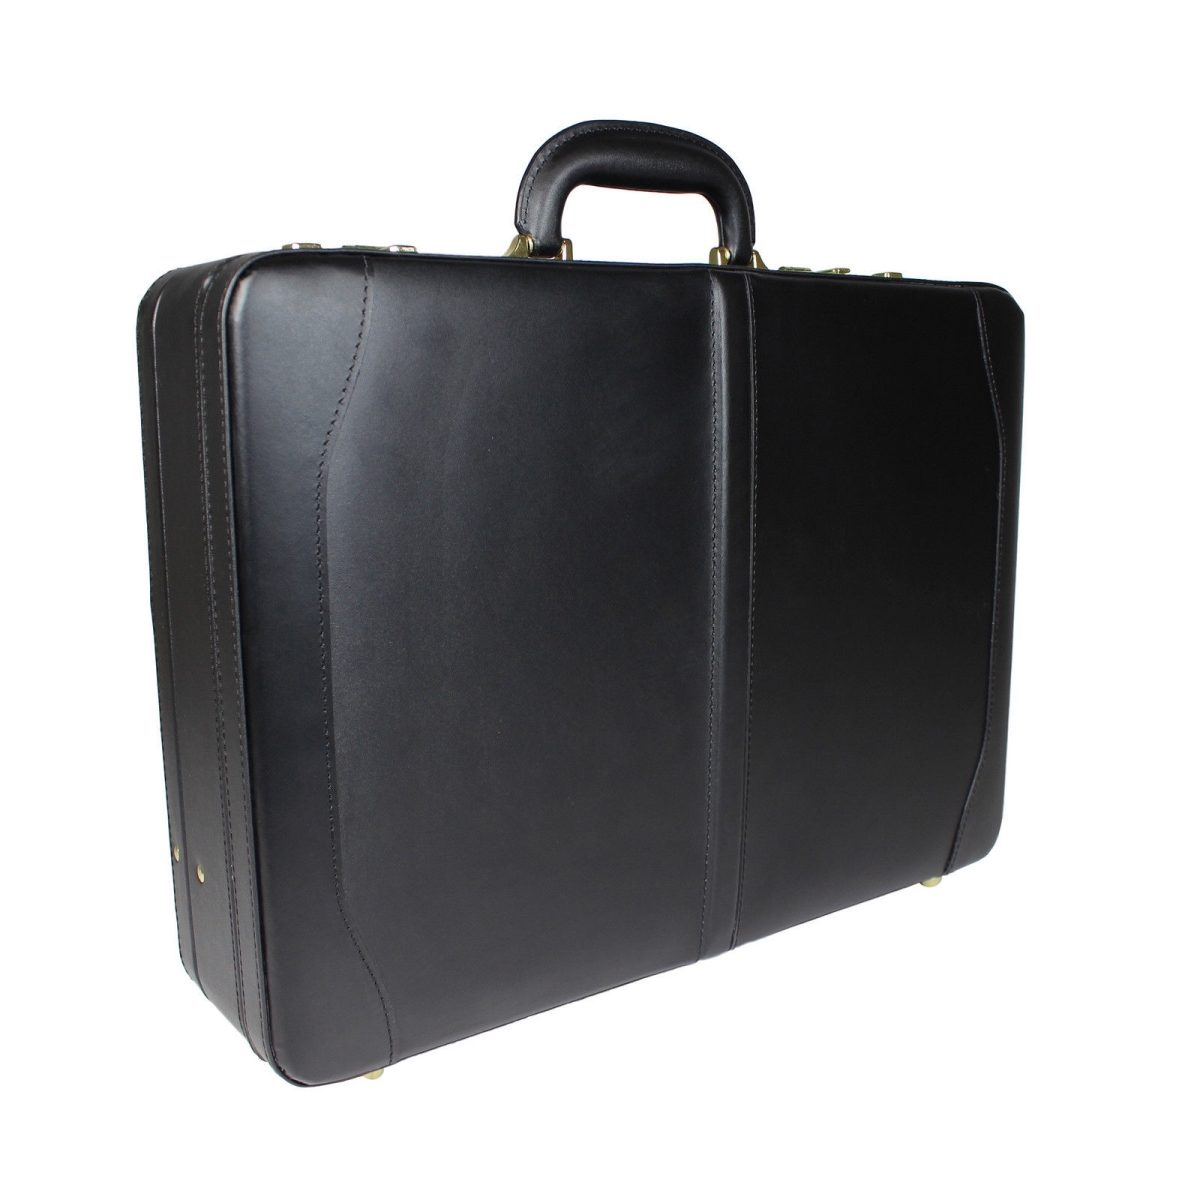 Wt-bc-3129 Avenues Executive Leather Expandable Attache Briefcase